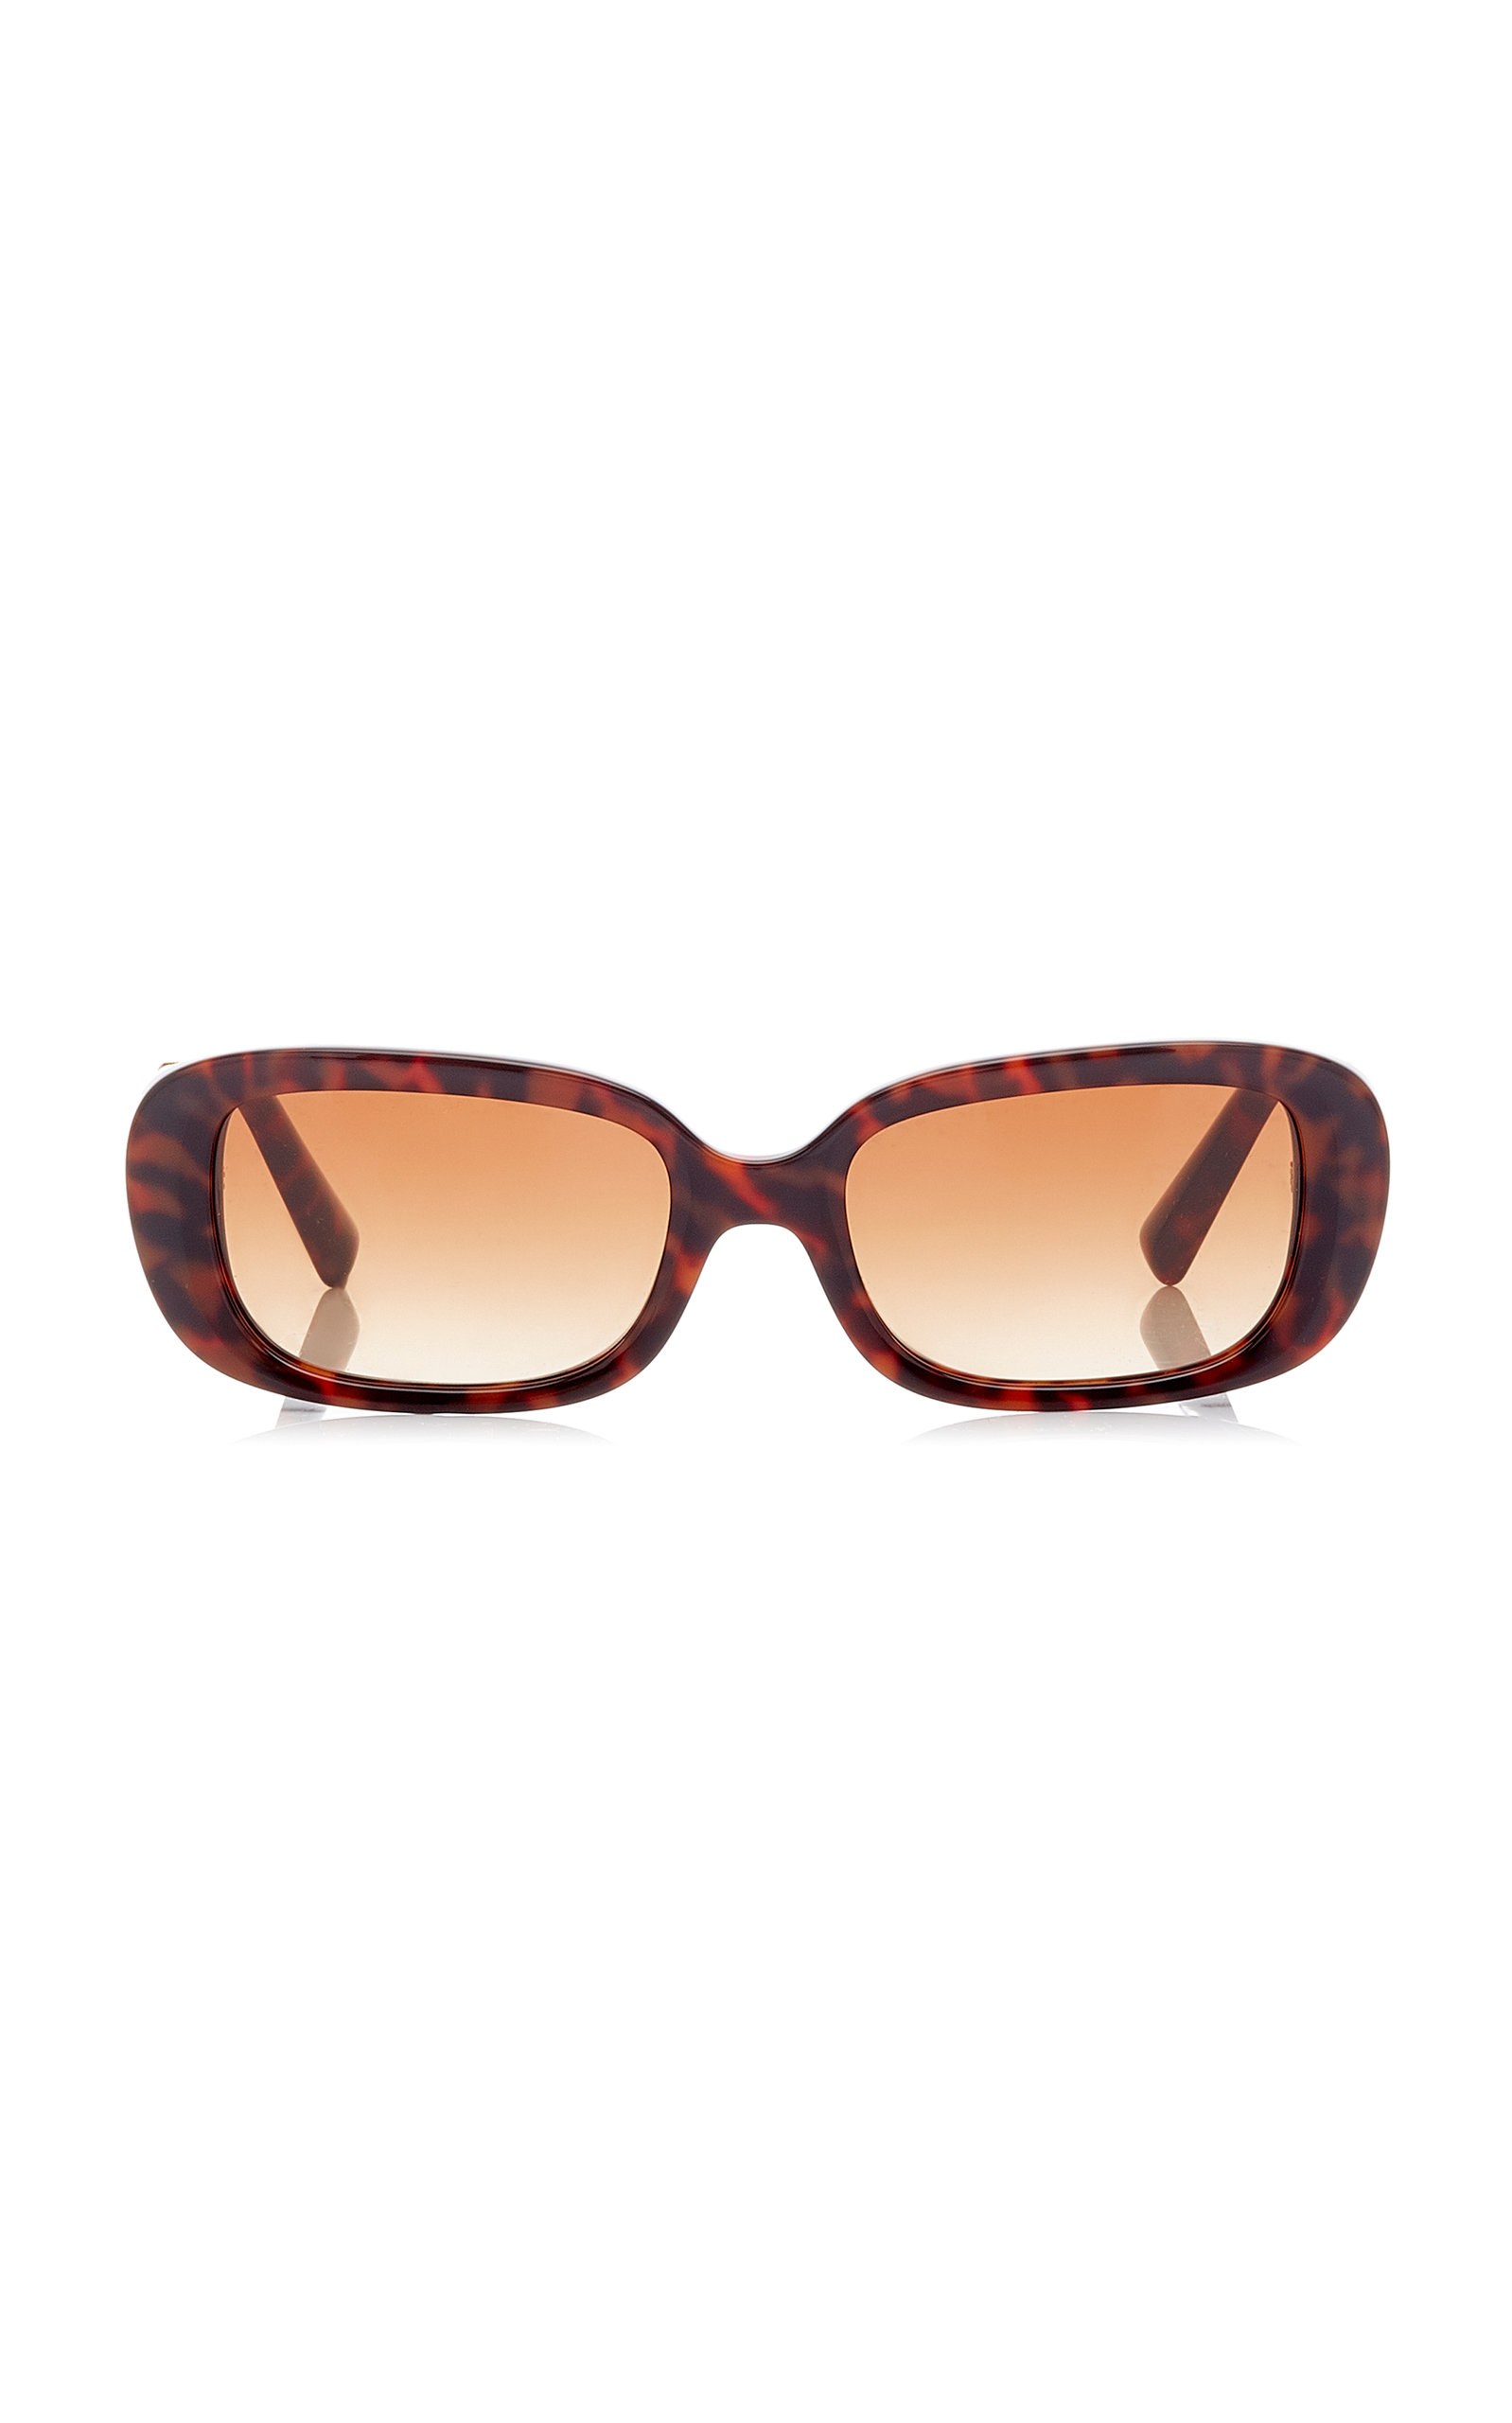 Valentino - Women's Valentino Garavani Printed Square-Frame Acetate Sunglasses - Brown/red - Moda Operandi